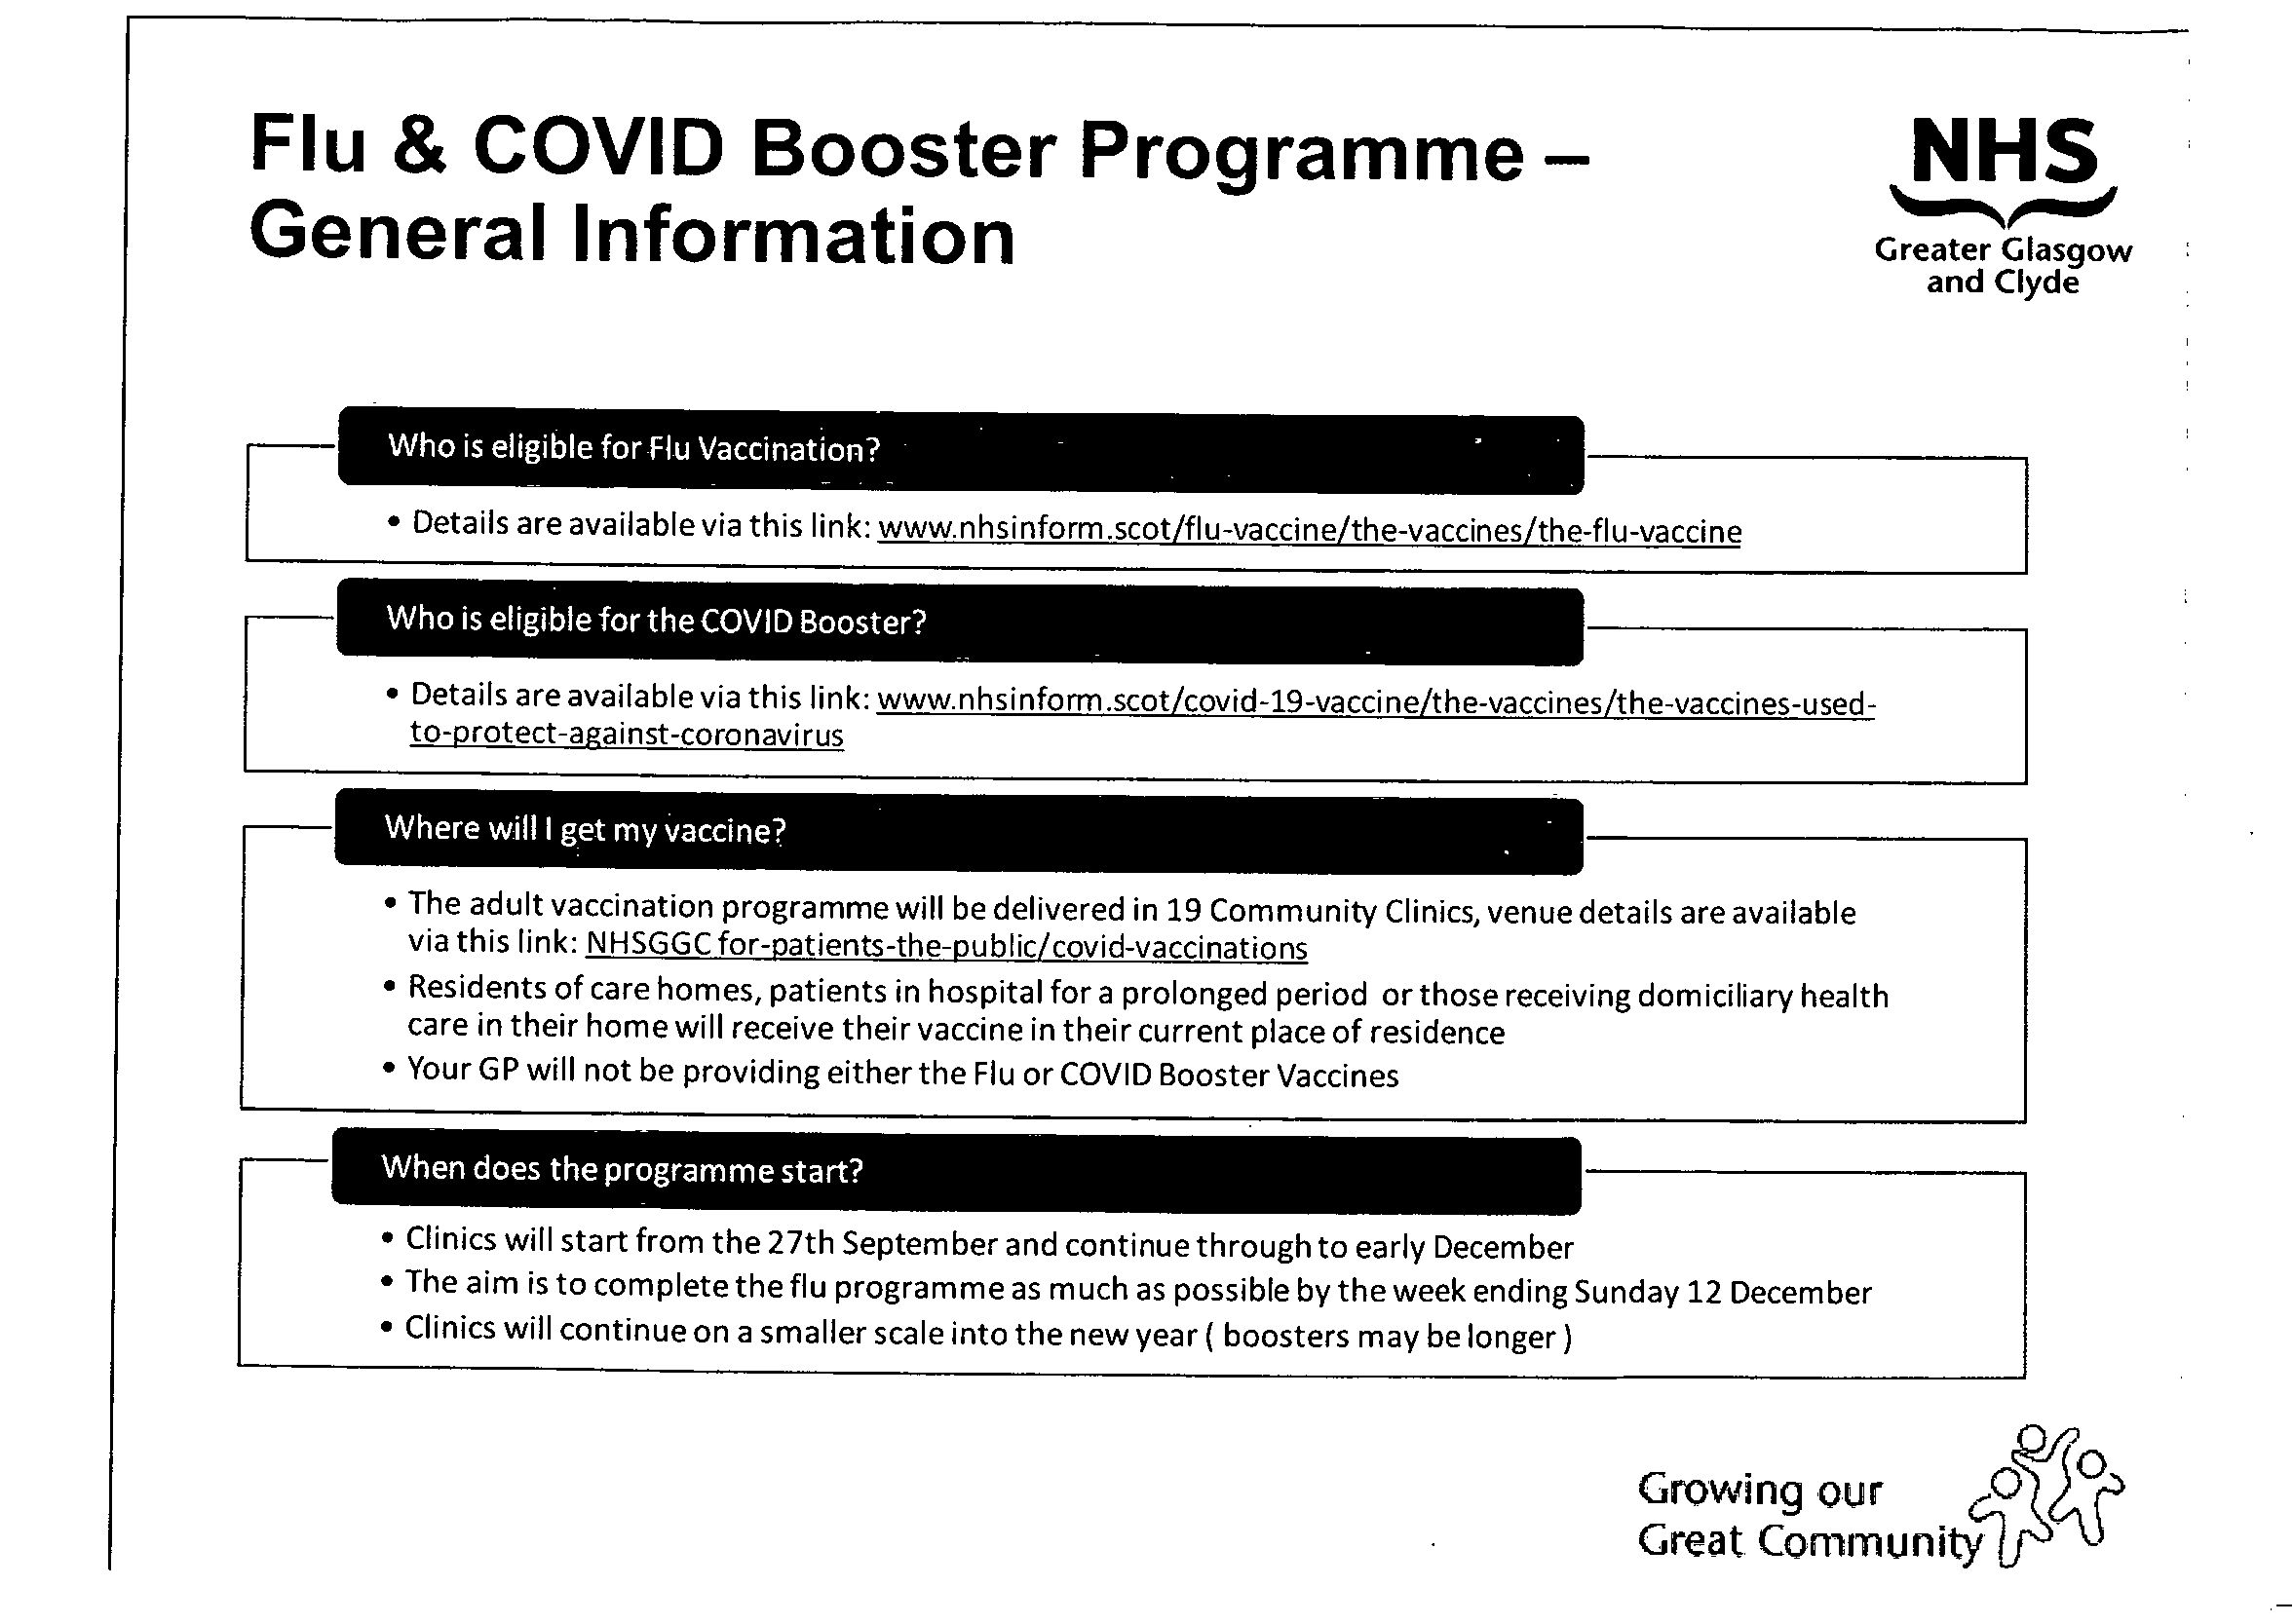 Flu & Covid Booster Information-1